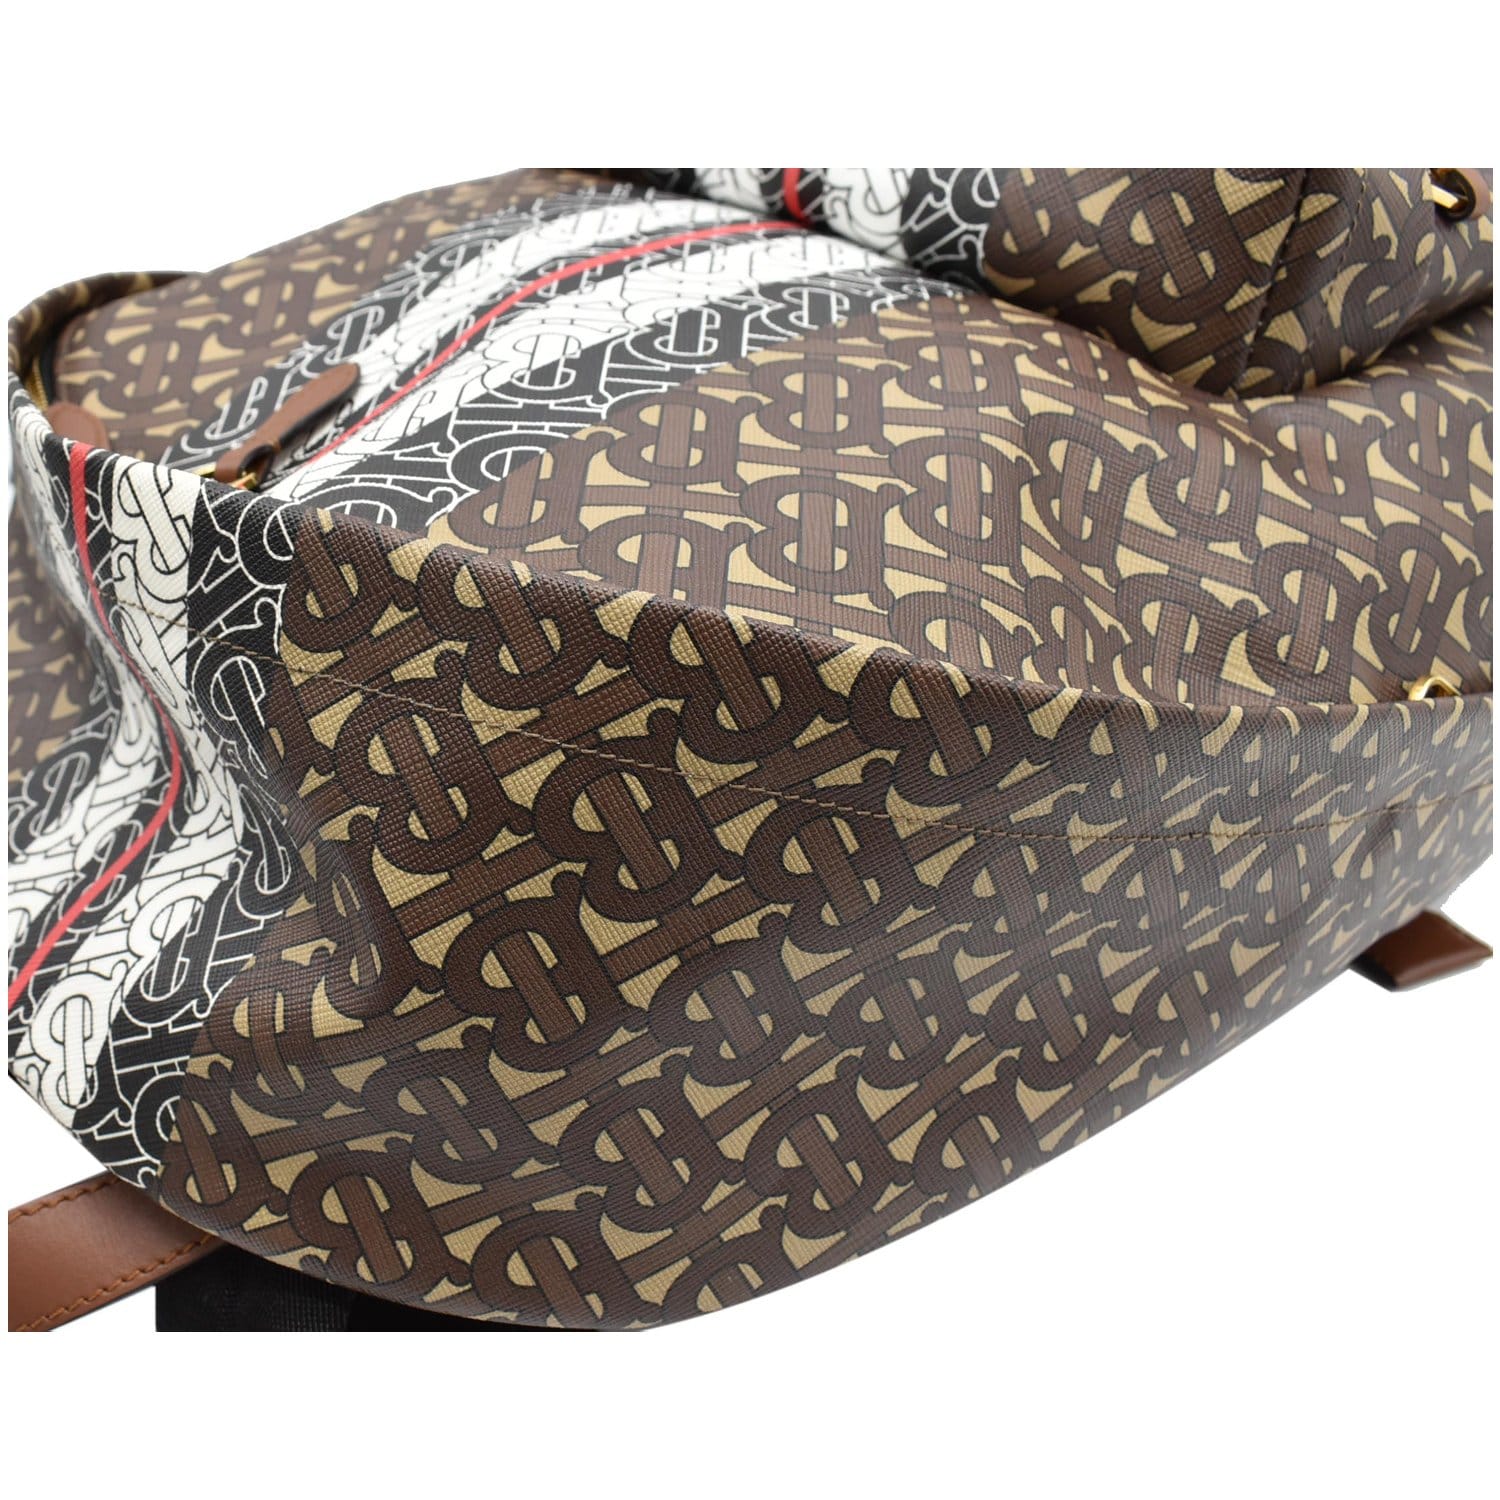 Burberry Monogram Stripe Backpack in Brown for Men